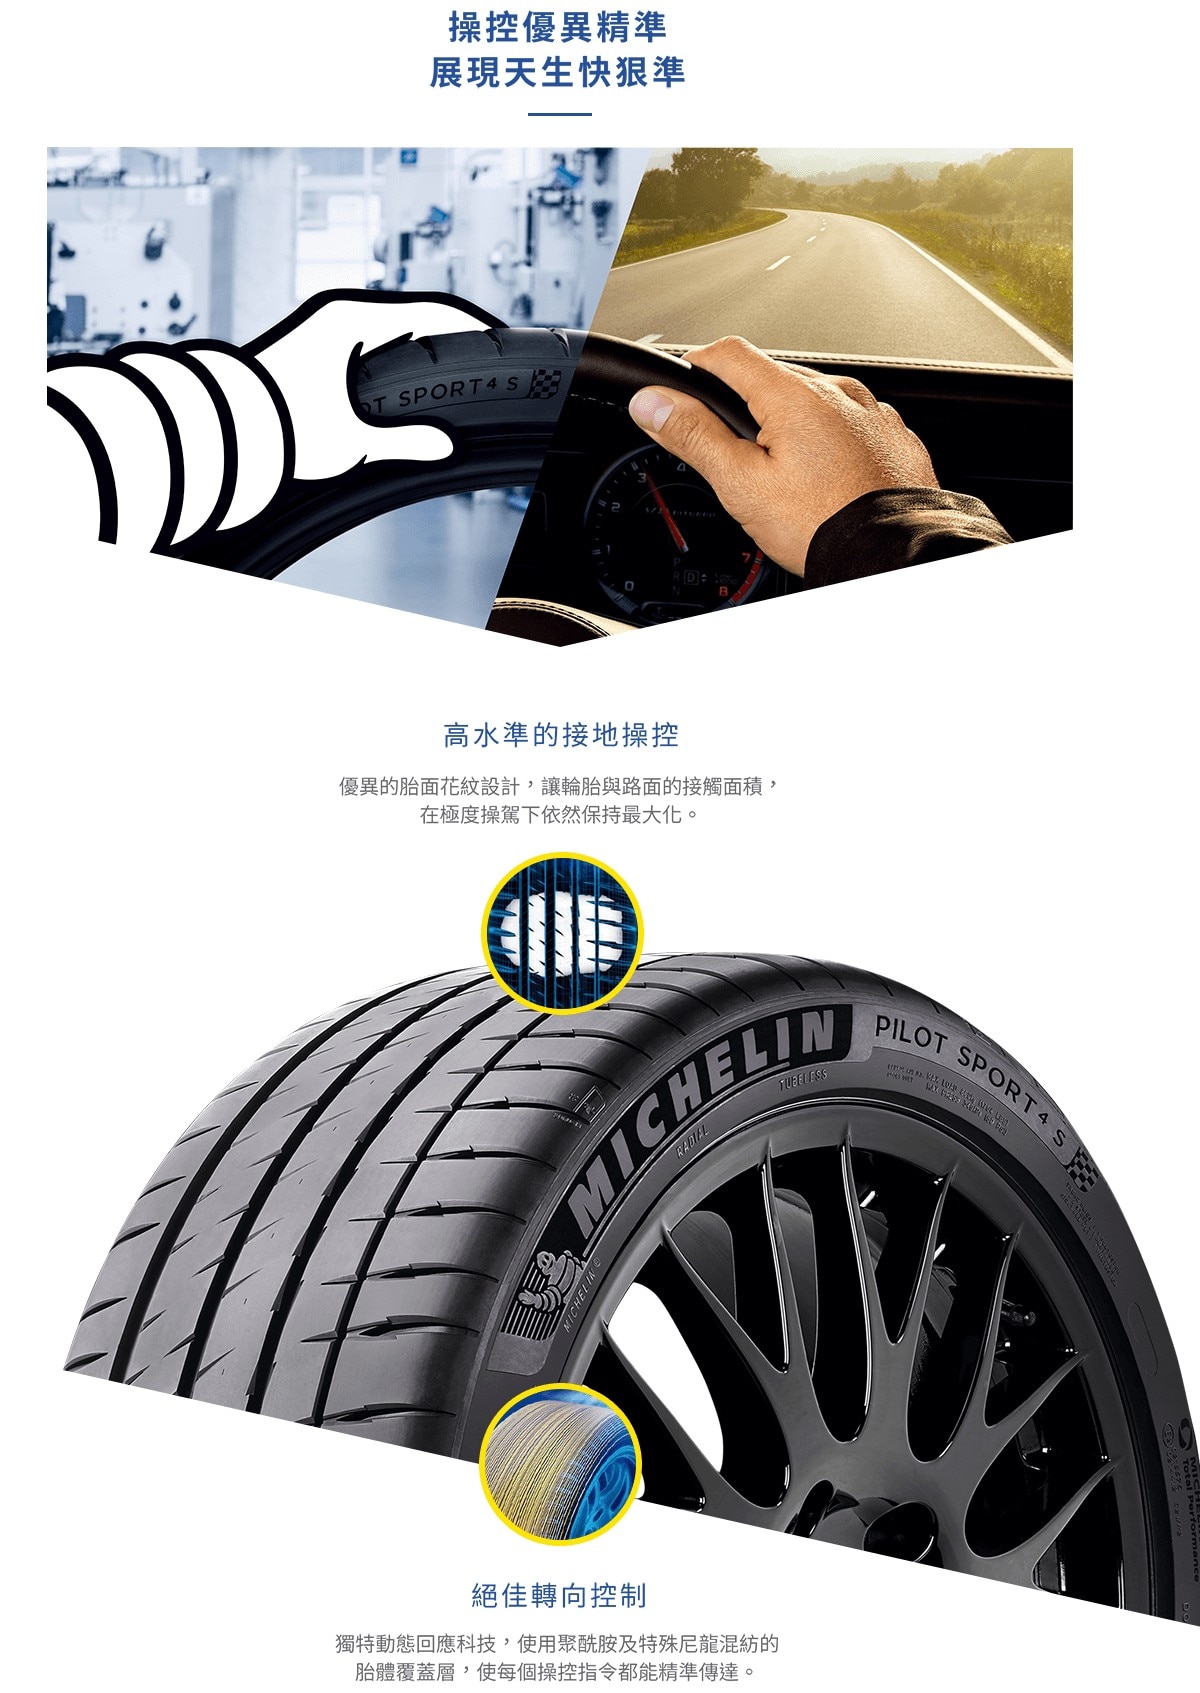 Michelin PILOTSPORT4S 具備優異的胎面花紋設計與獨特的動態回應科技，使其可以高水準的接地操控與絕佳的轉向控制。